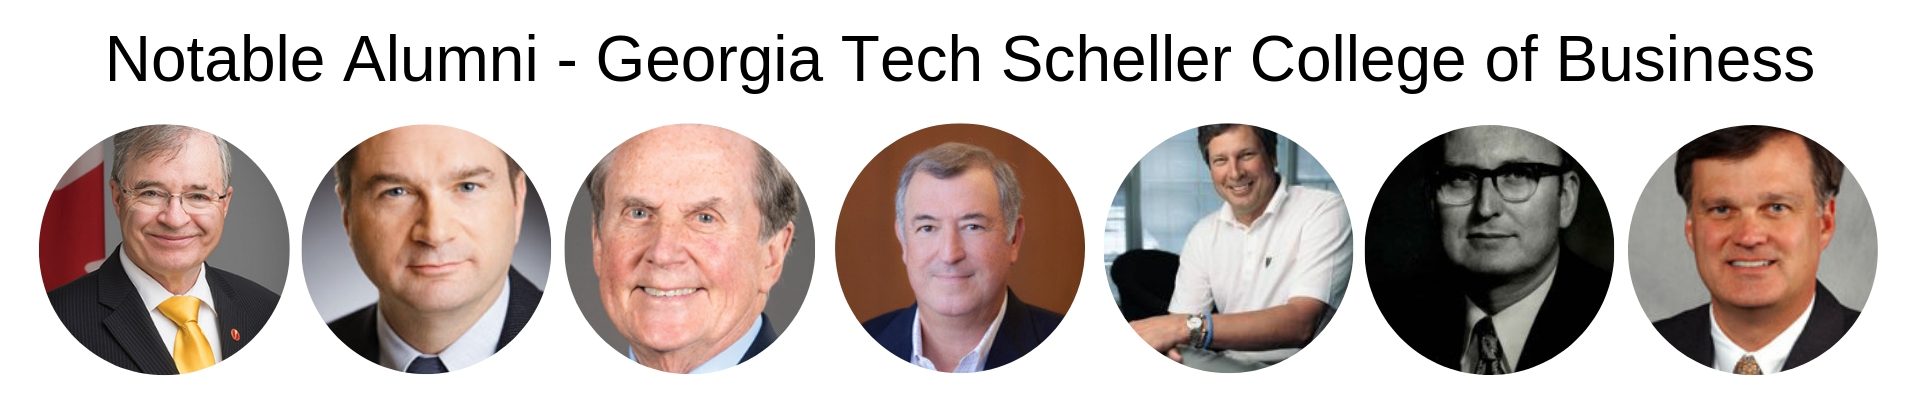 Georgia Tech MBA - Scheller College of Business - Notable Alumni